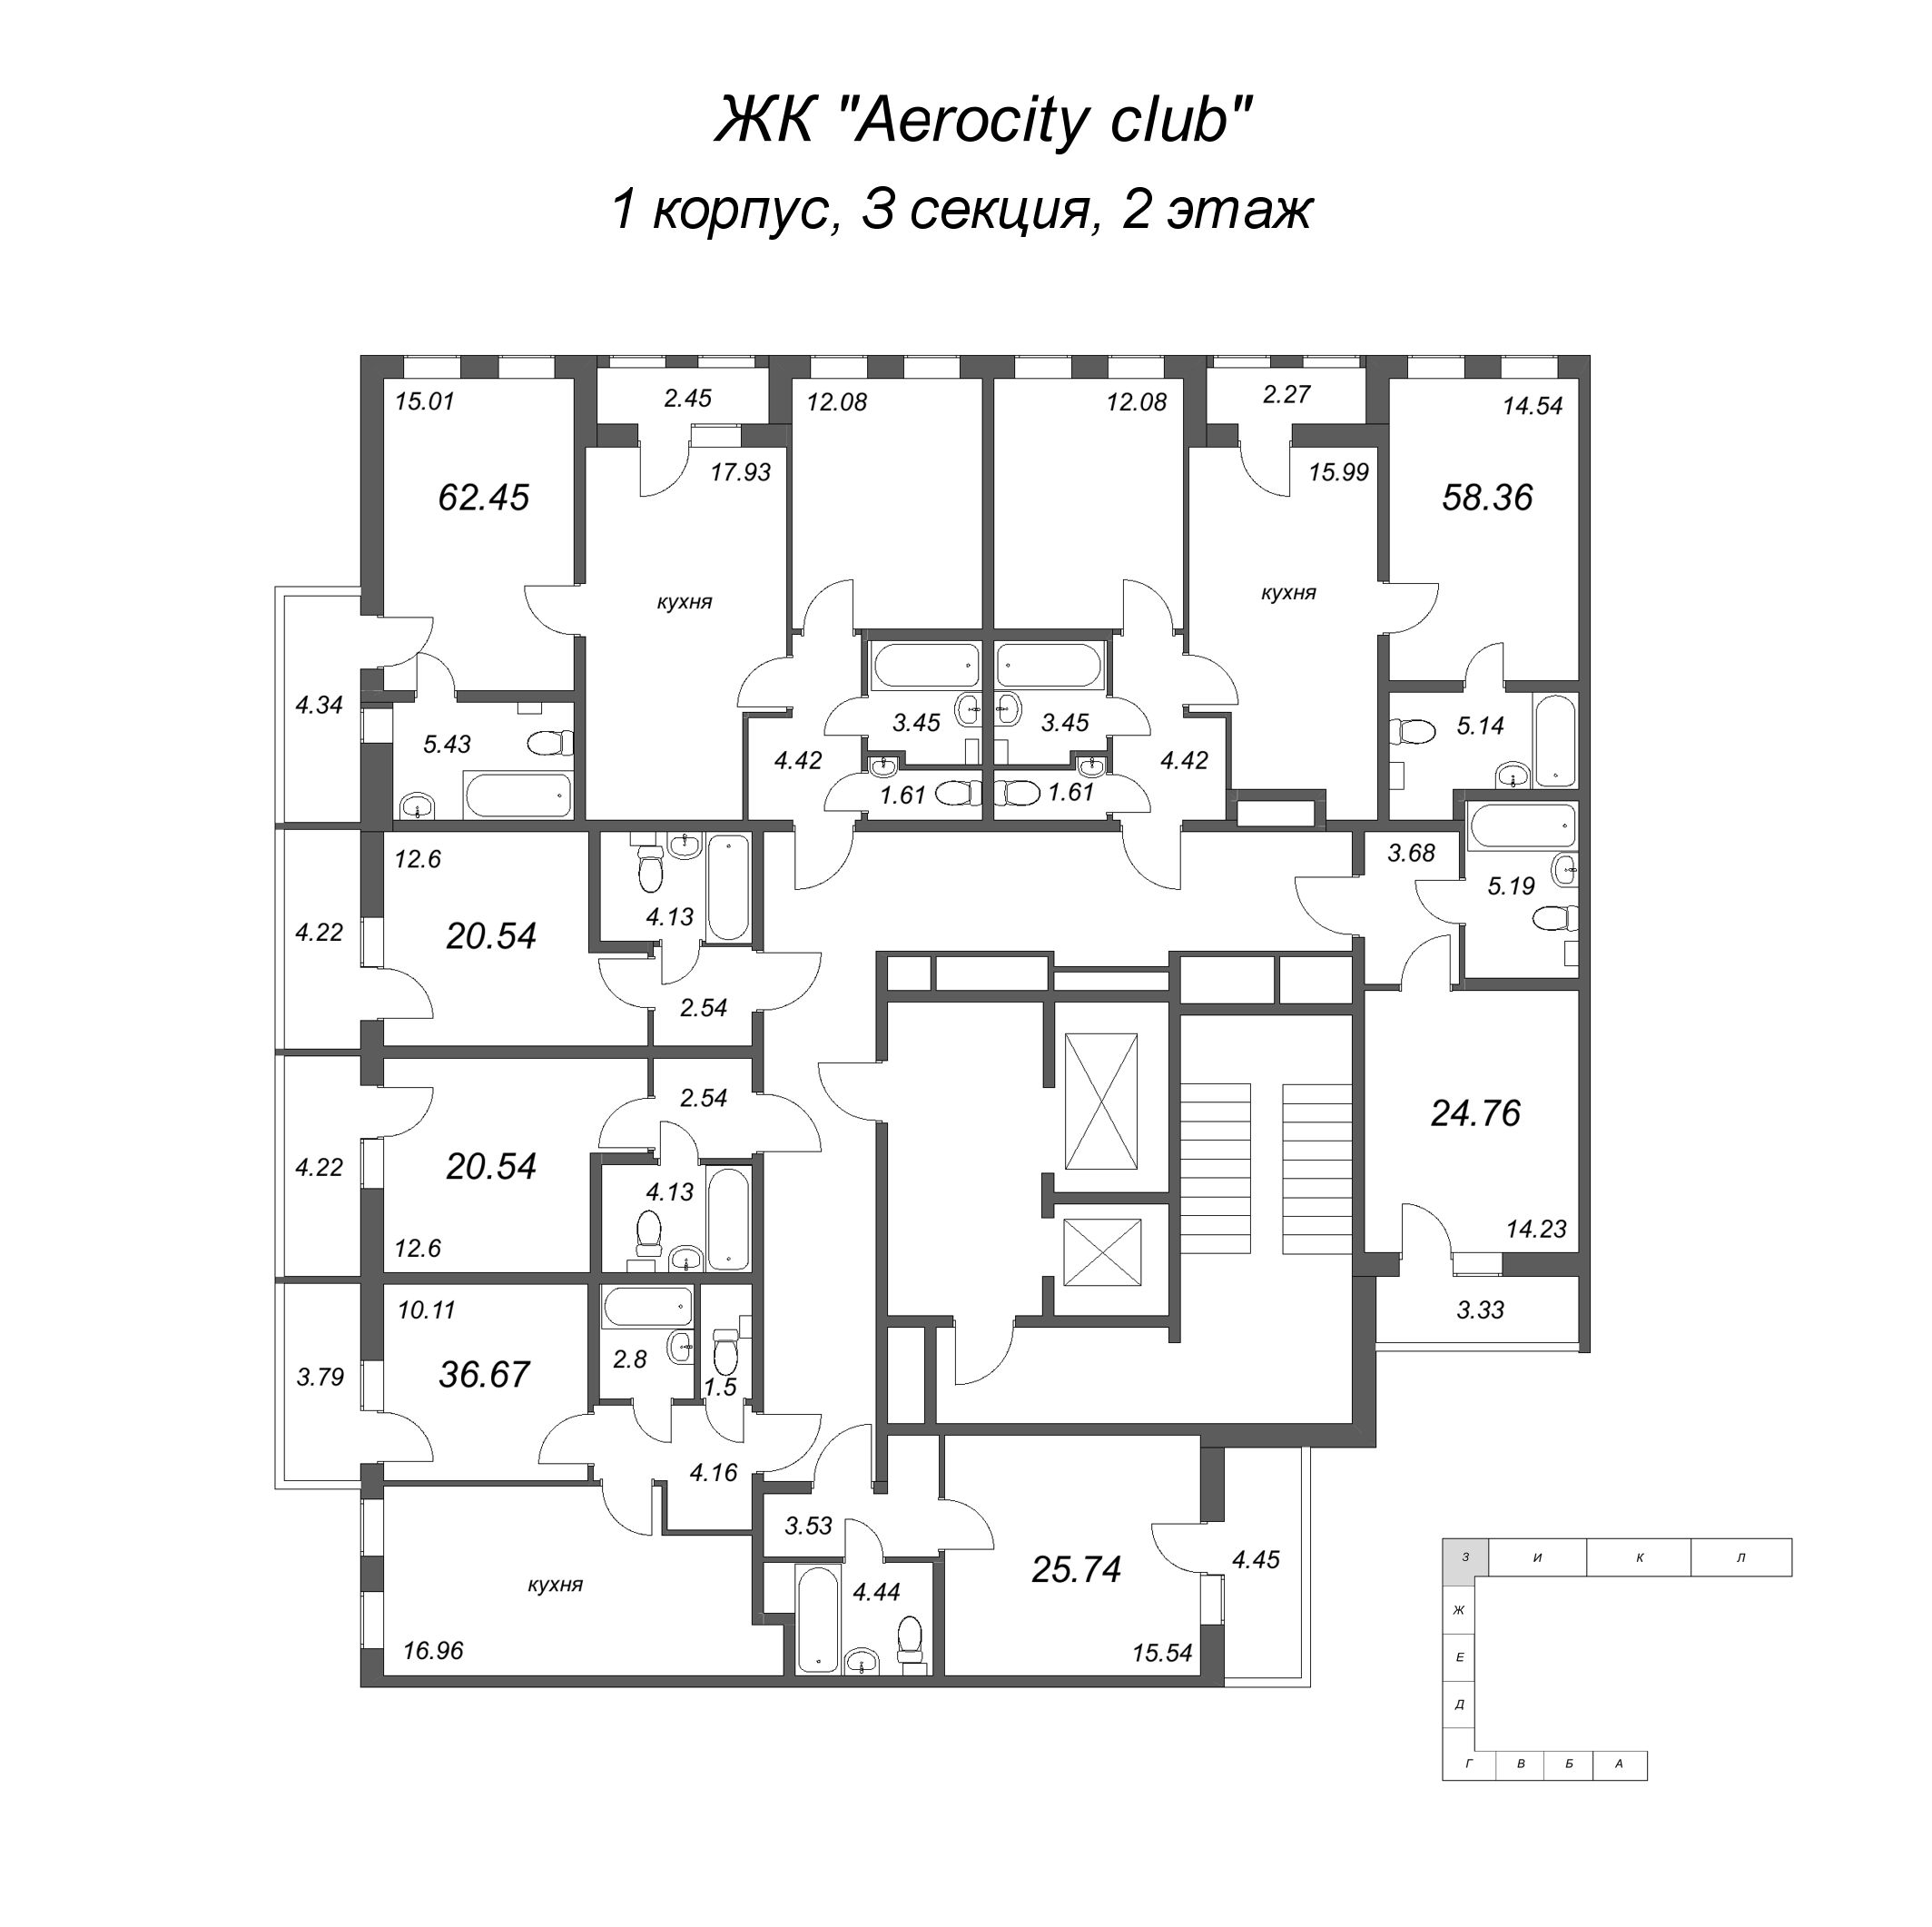 2-комнатная (Евро) квартира, 36.67 м² - планировка этажа